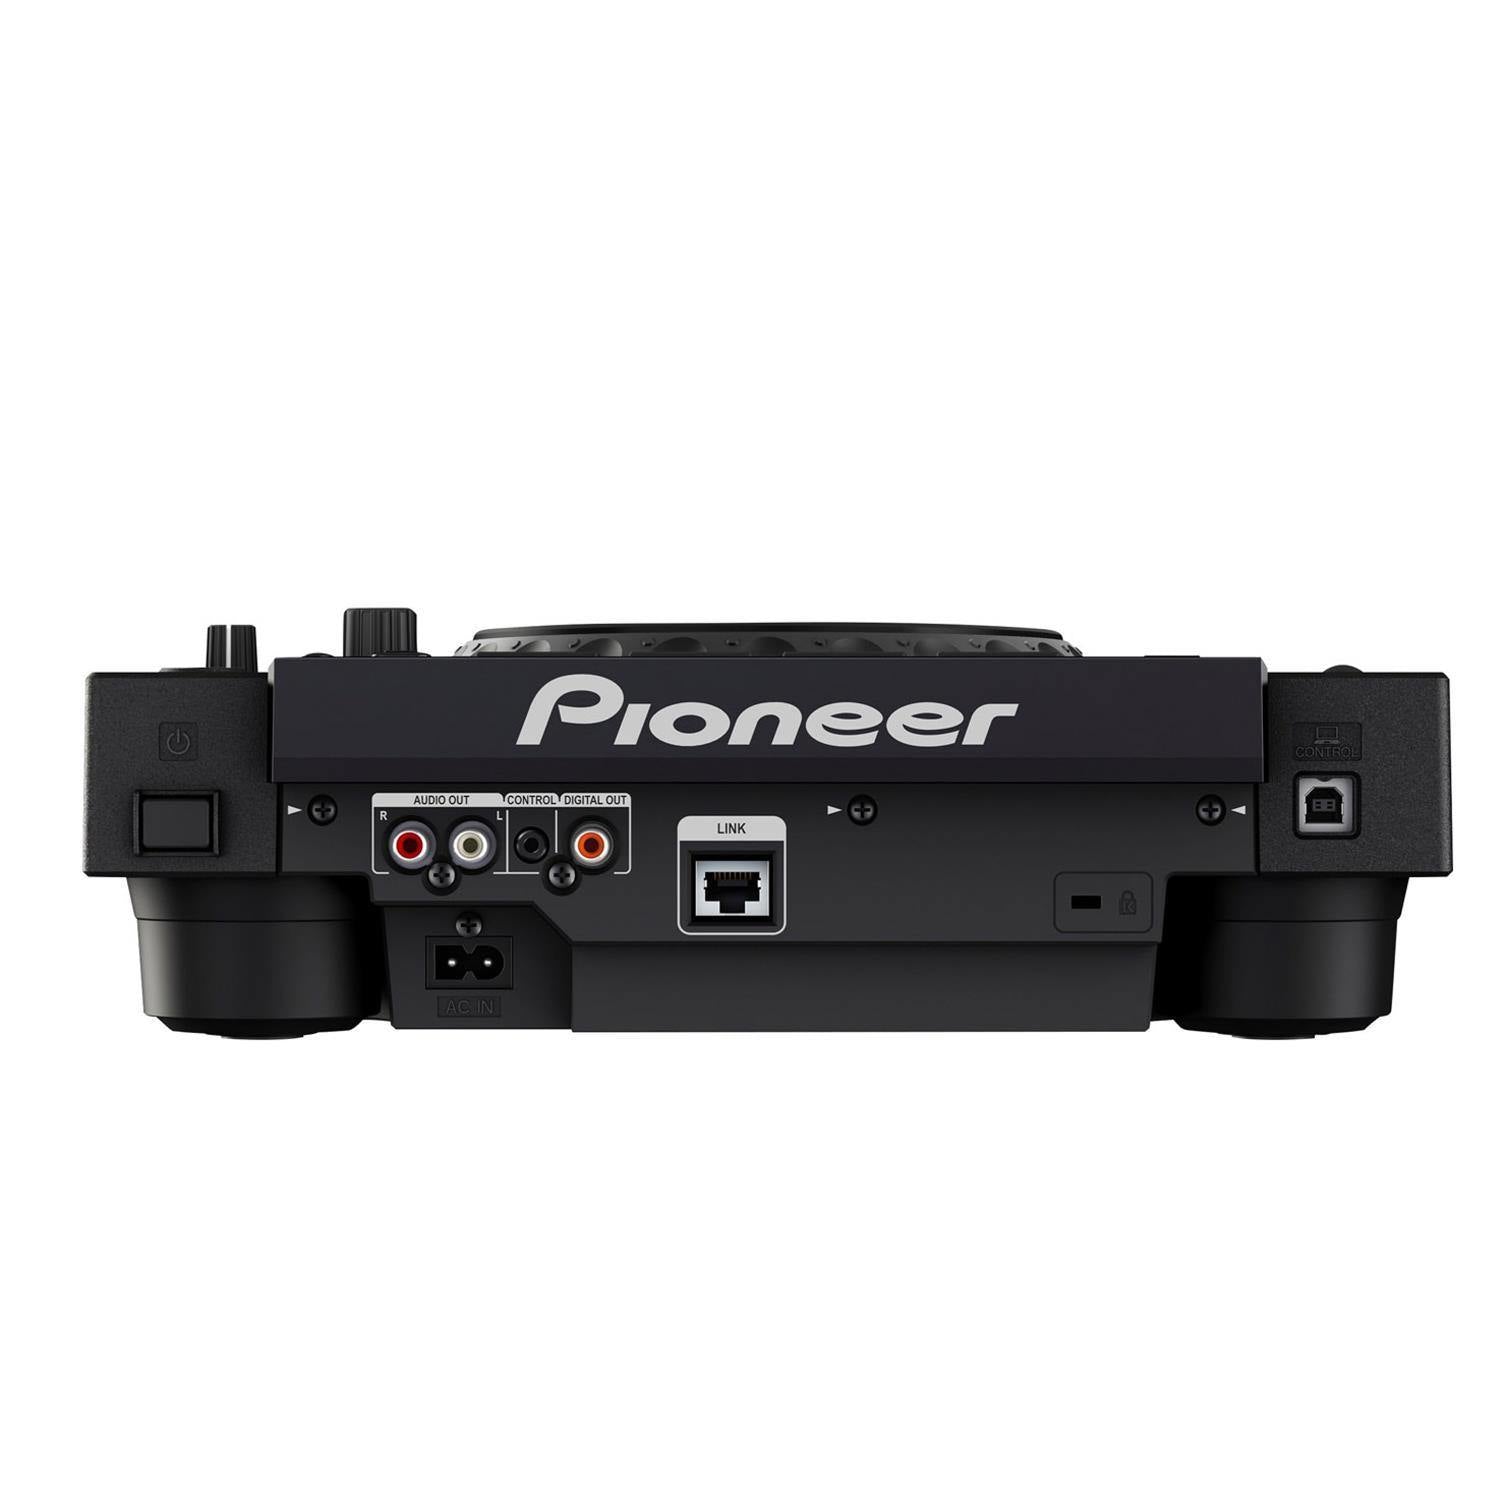 PioneerCDJ-900NXS Professional DJ Multi Player with CD Drive - DY Pro Audio